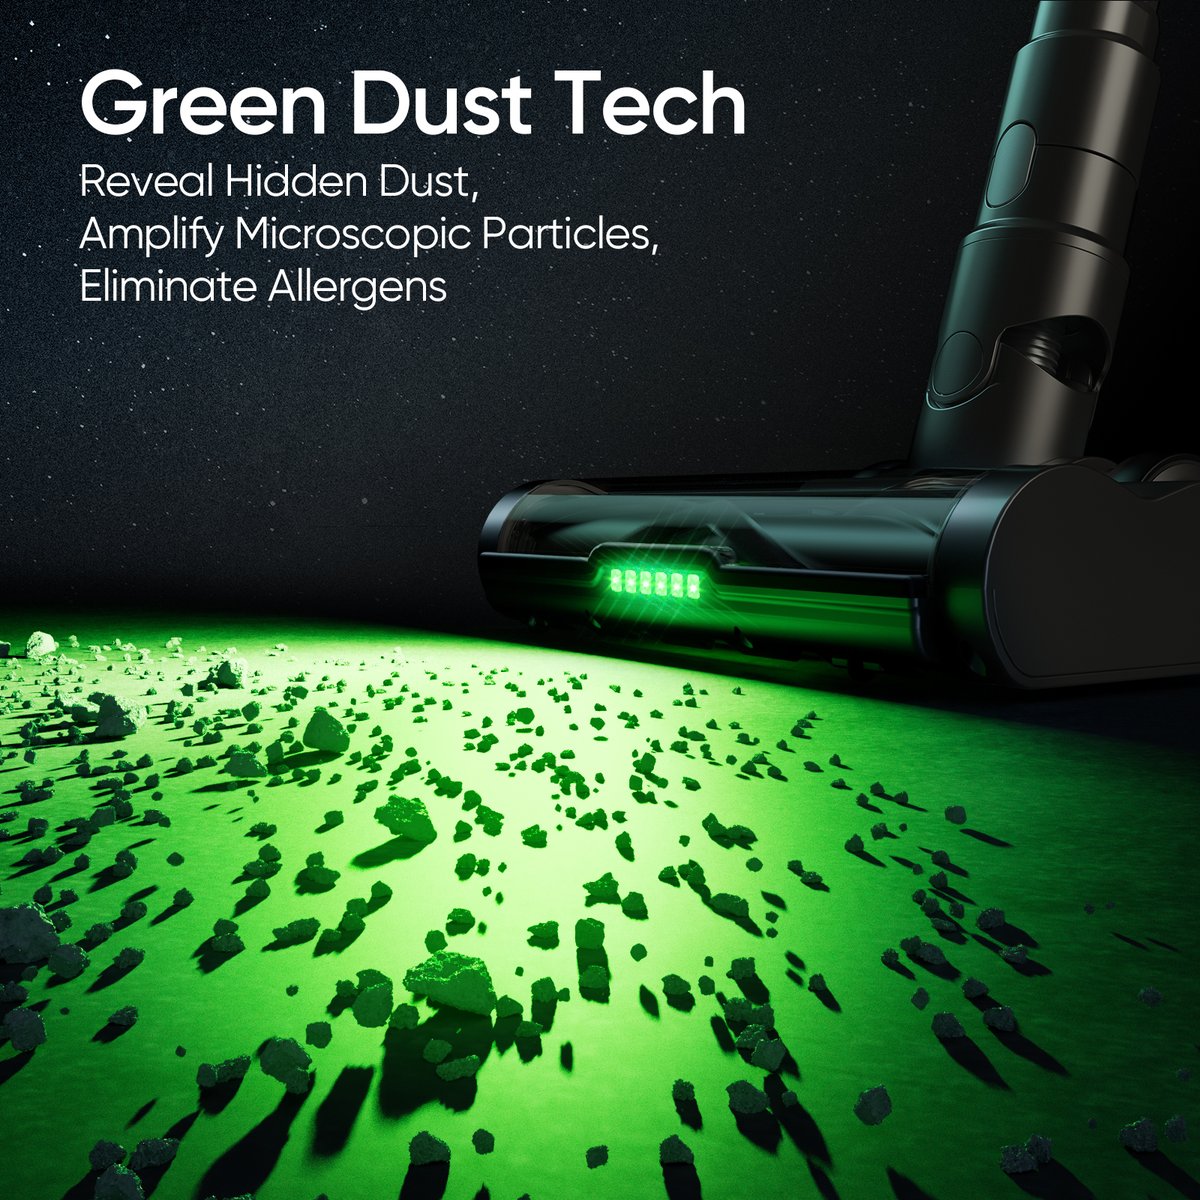 🍃 Introducing the Moosoo TD1 Cordless Vacuum Cleaner with Green Dust Tech! 🍃

#MoosooTD1 #GreenDustTech #CleanLiving #AllergenFree #HomeCleaningMagic